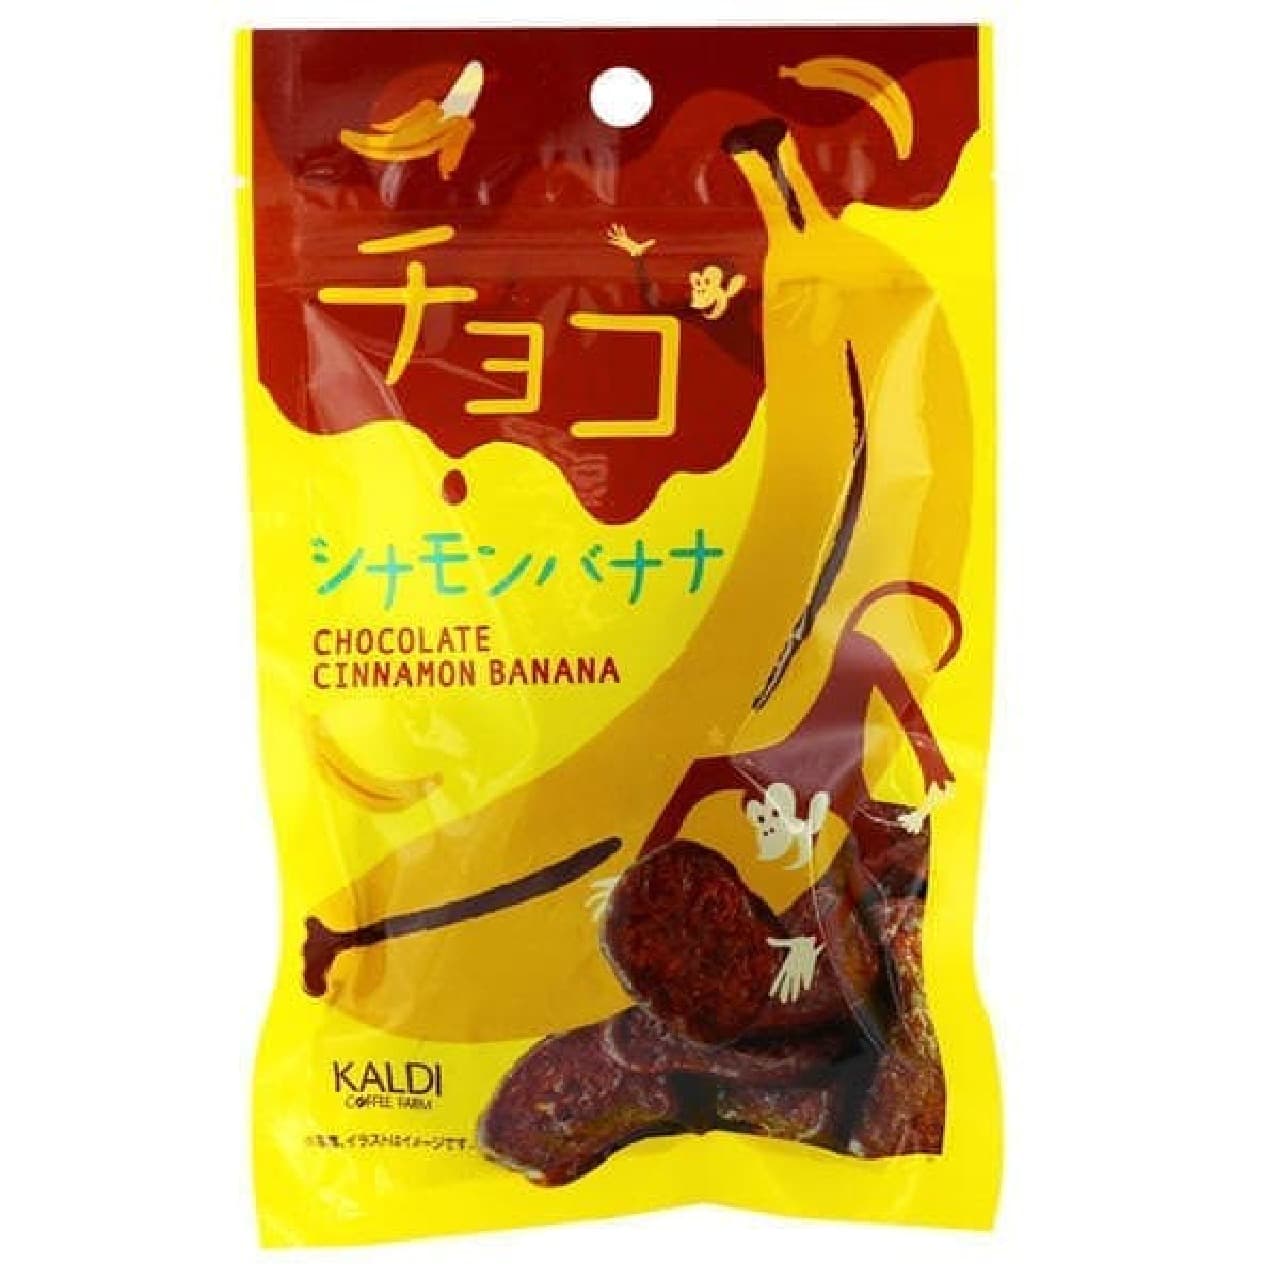 "Chocolate cinnamon banana" in KALDI